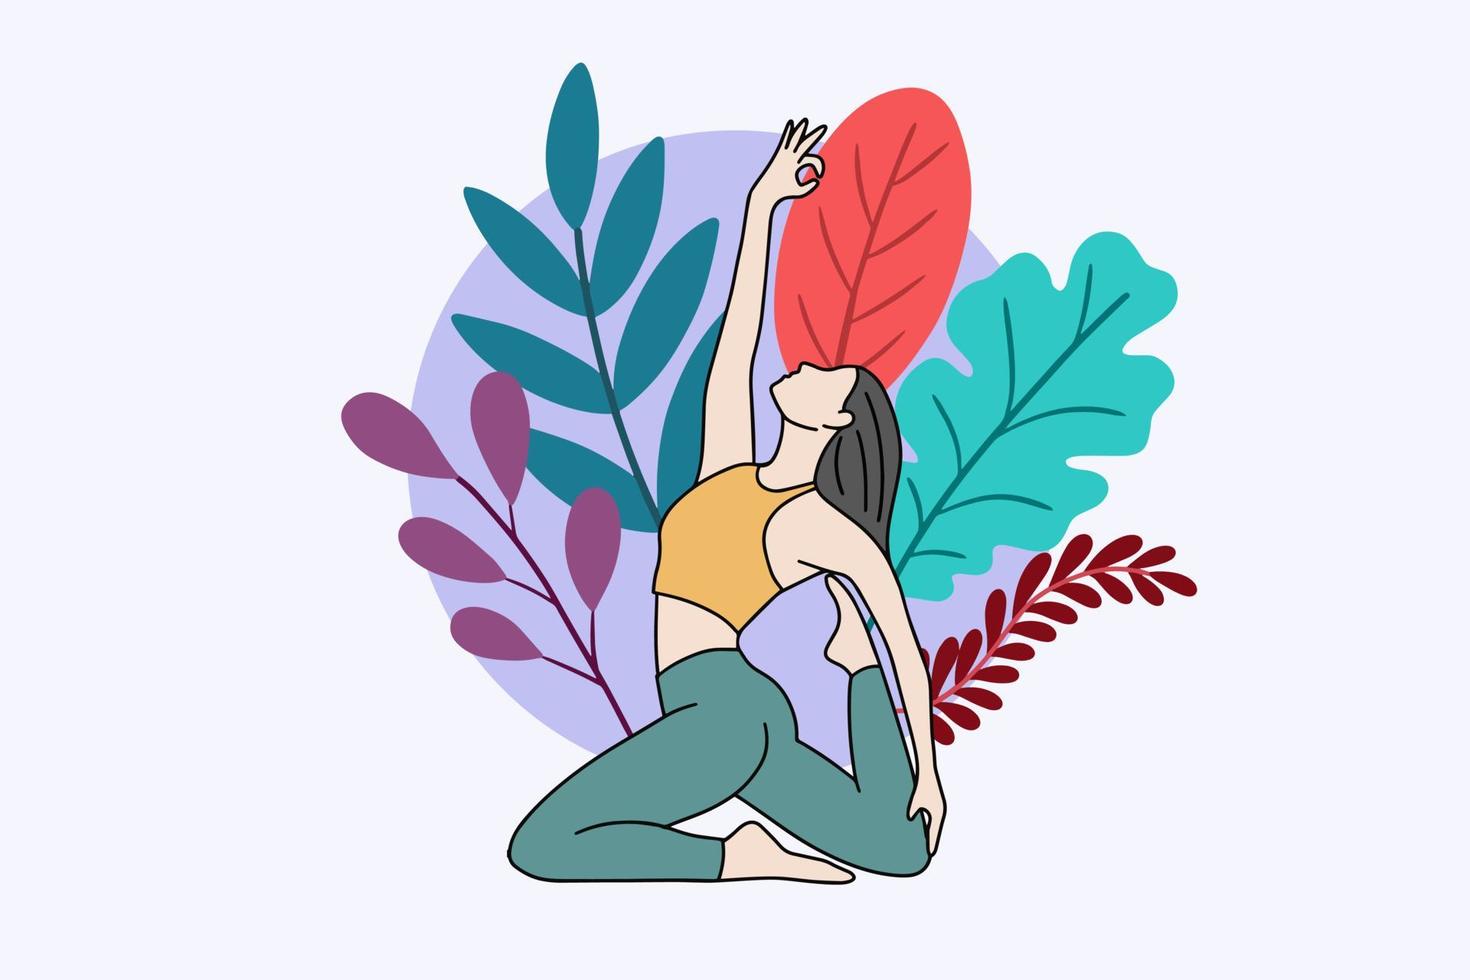 Woman Girl Yoga Meditation People Pose Spiritual Relax Flat illustration vector